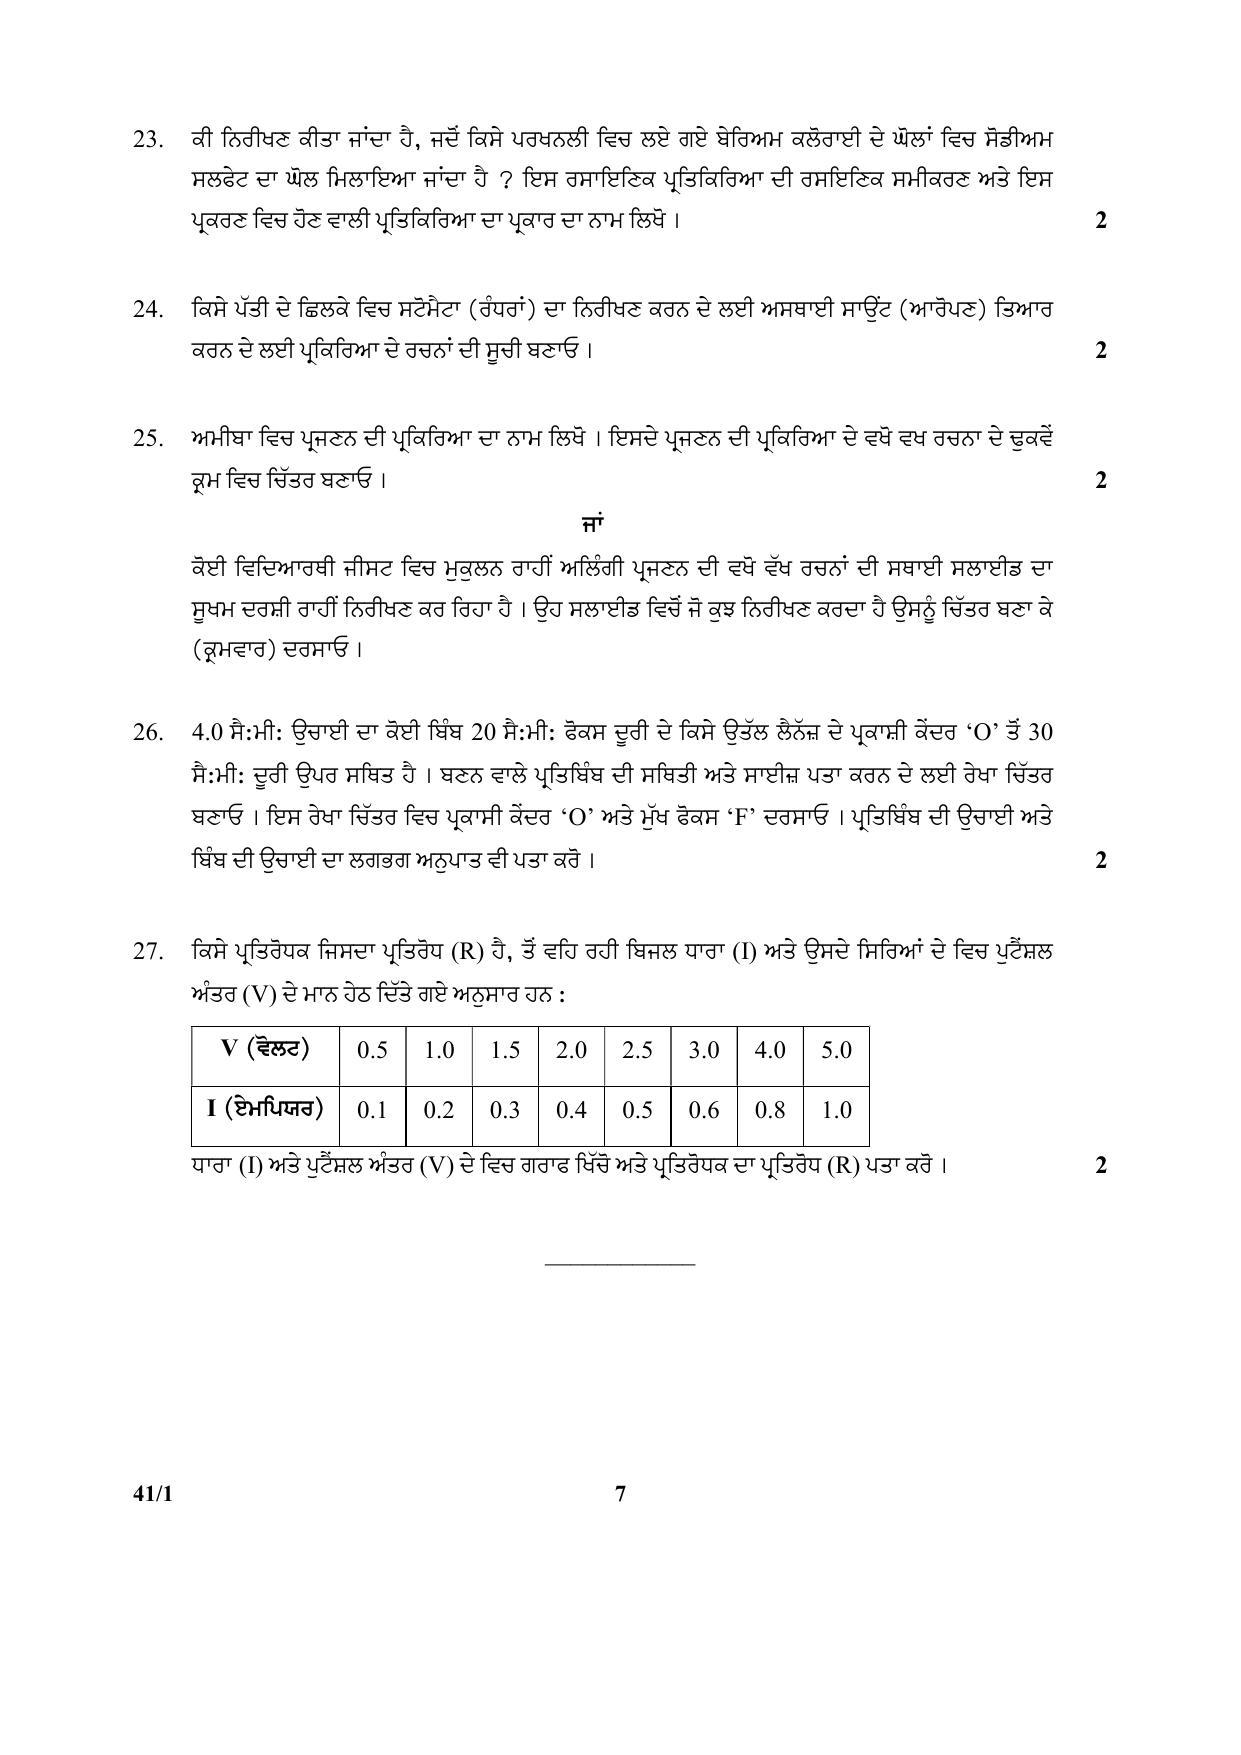 CBSE Class 10 41-1 (Science)_Punjabi 2018 Question Paper - Page 7